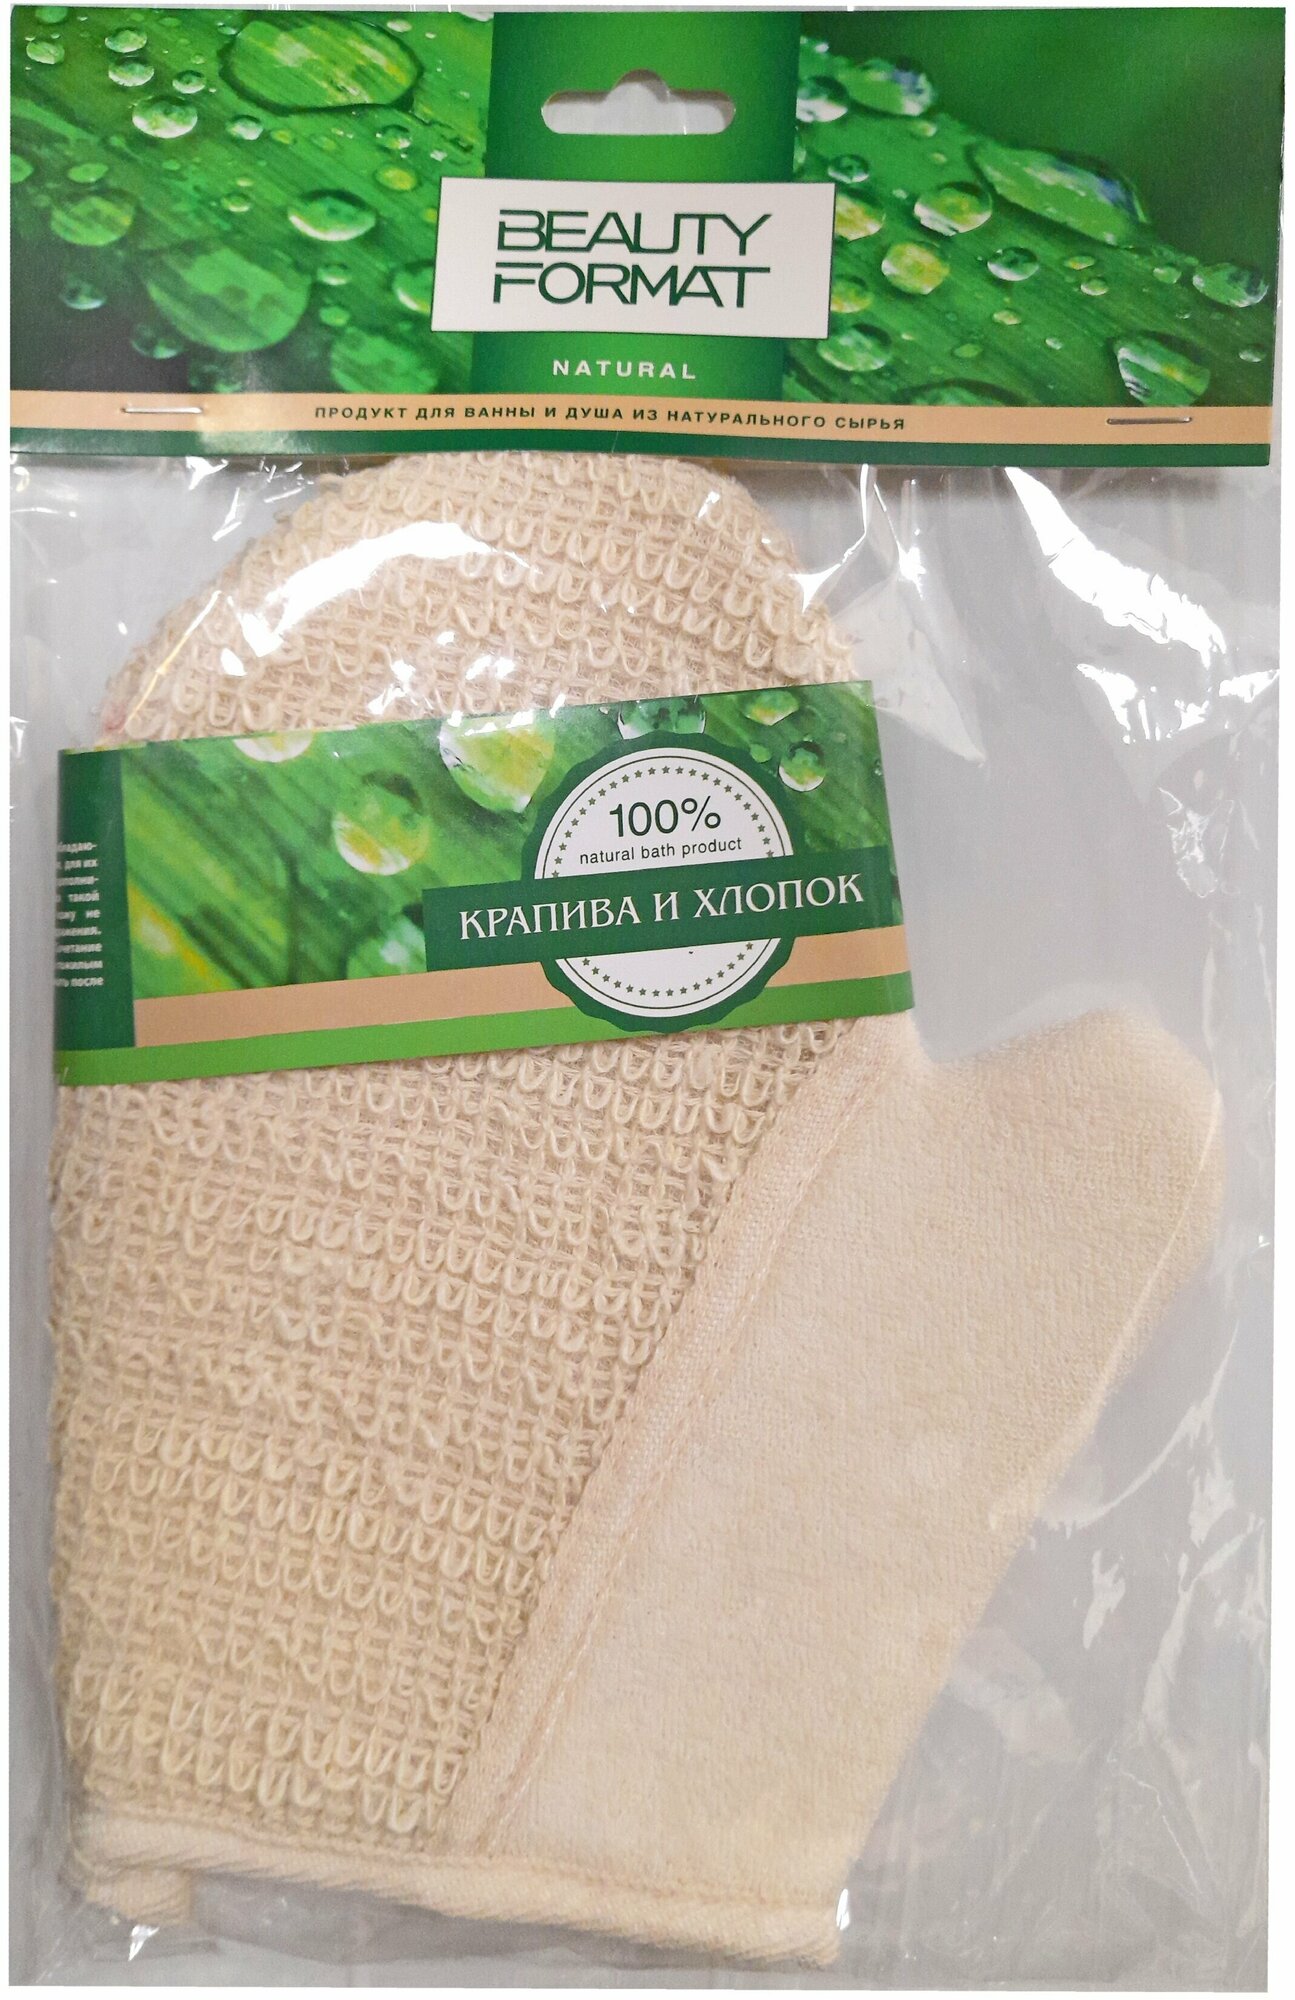 BEAUTY FORMAT Мочалка рукавица / Натуральная мочалка из крапивы и хлопка / Мочалка массажная